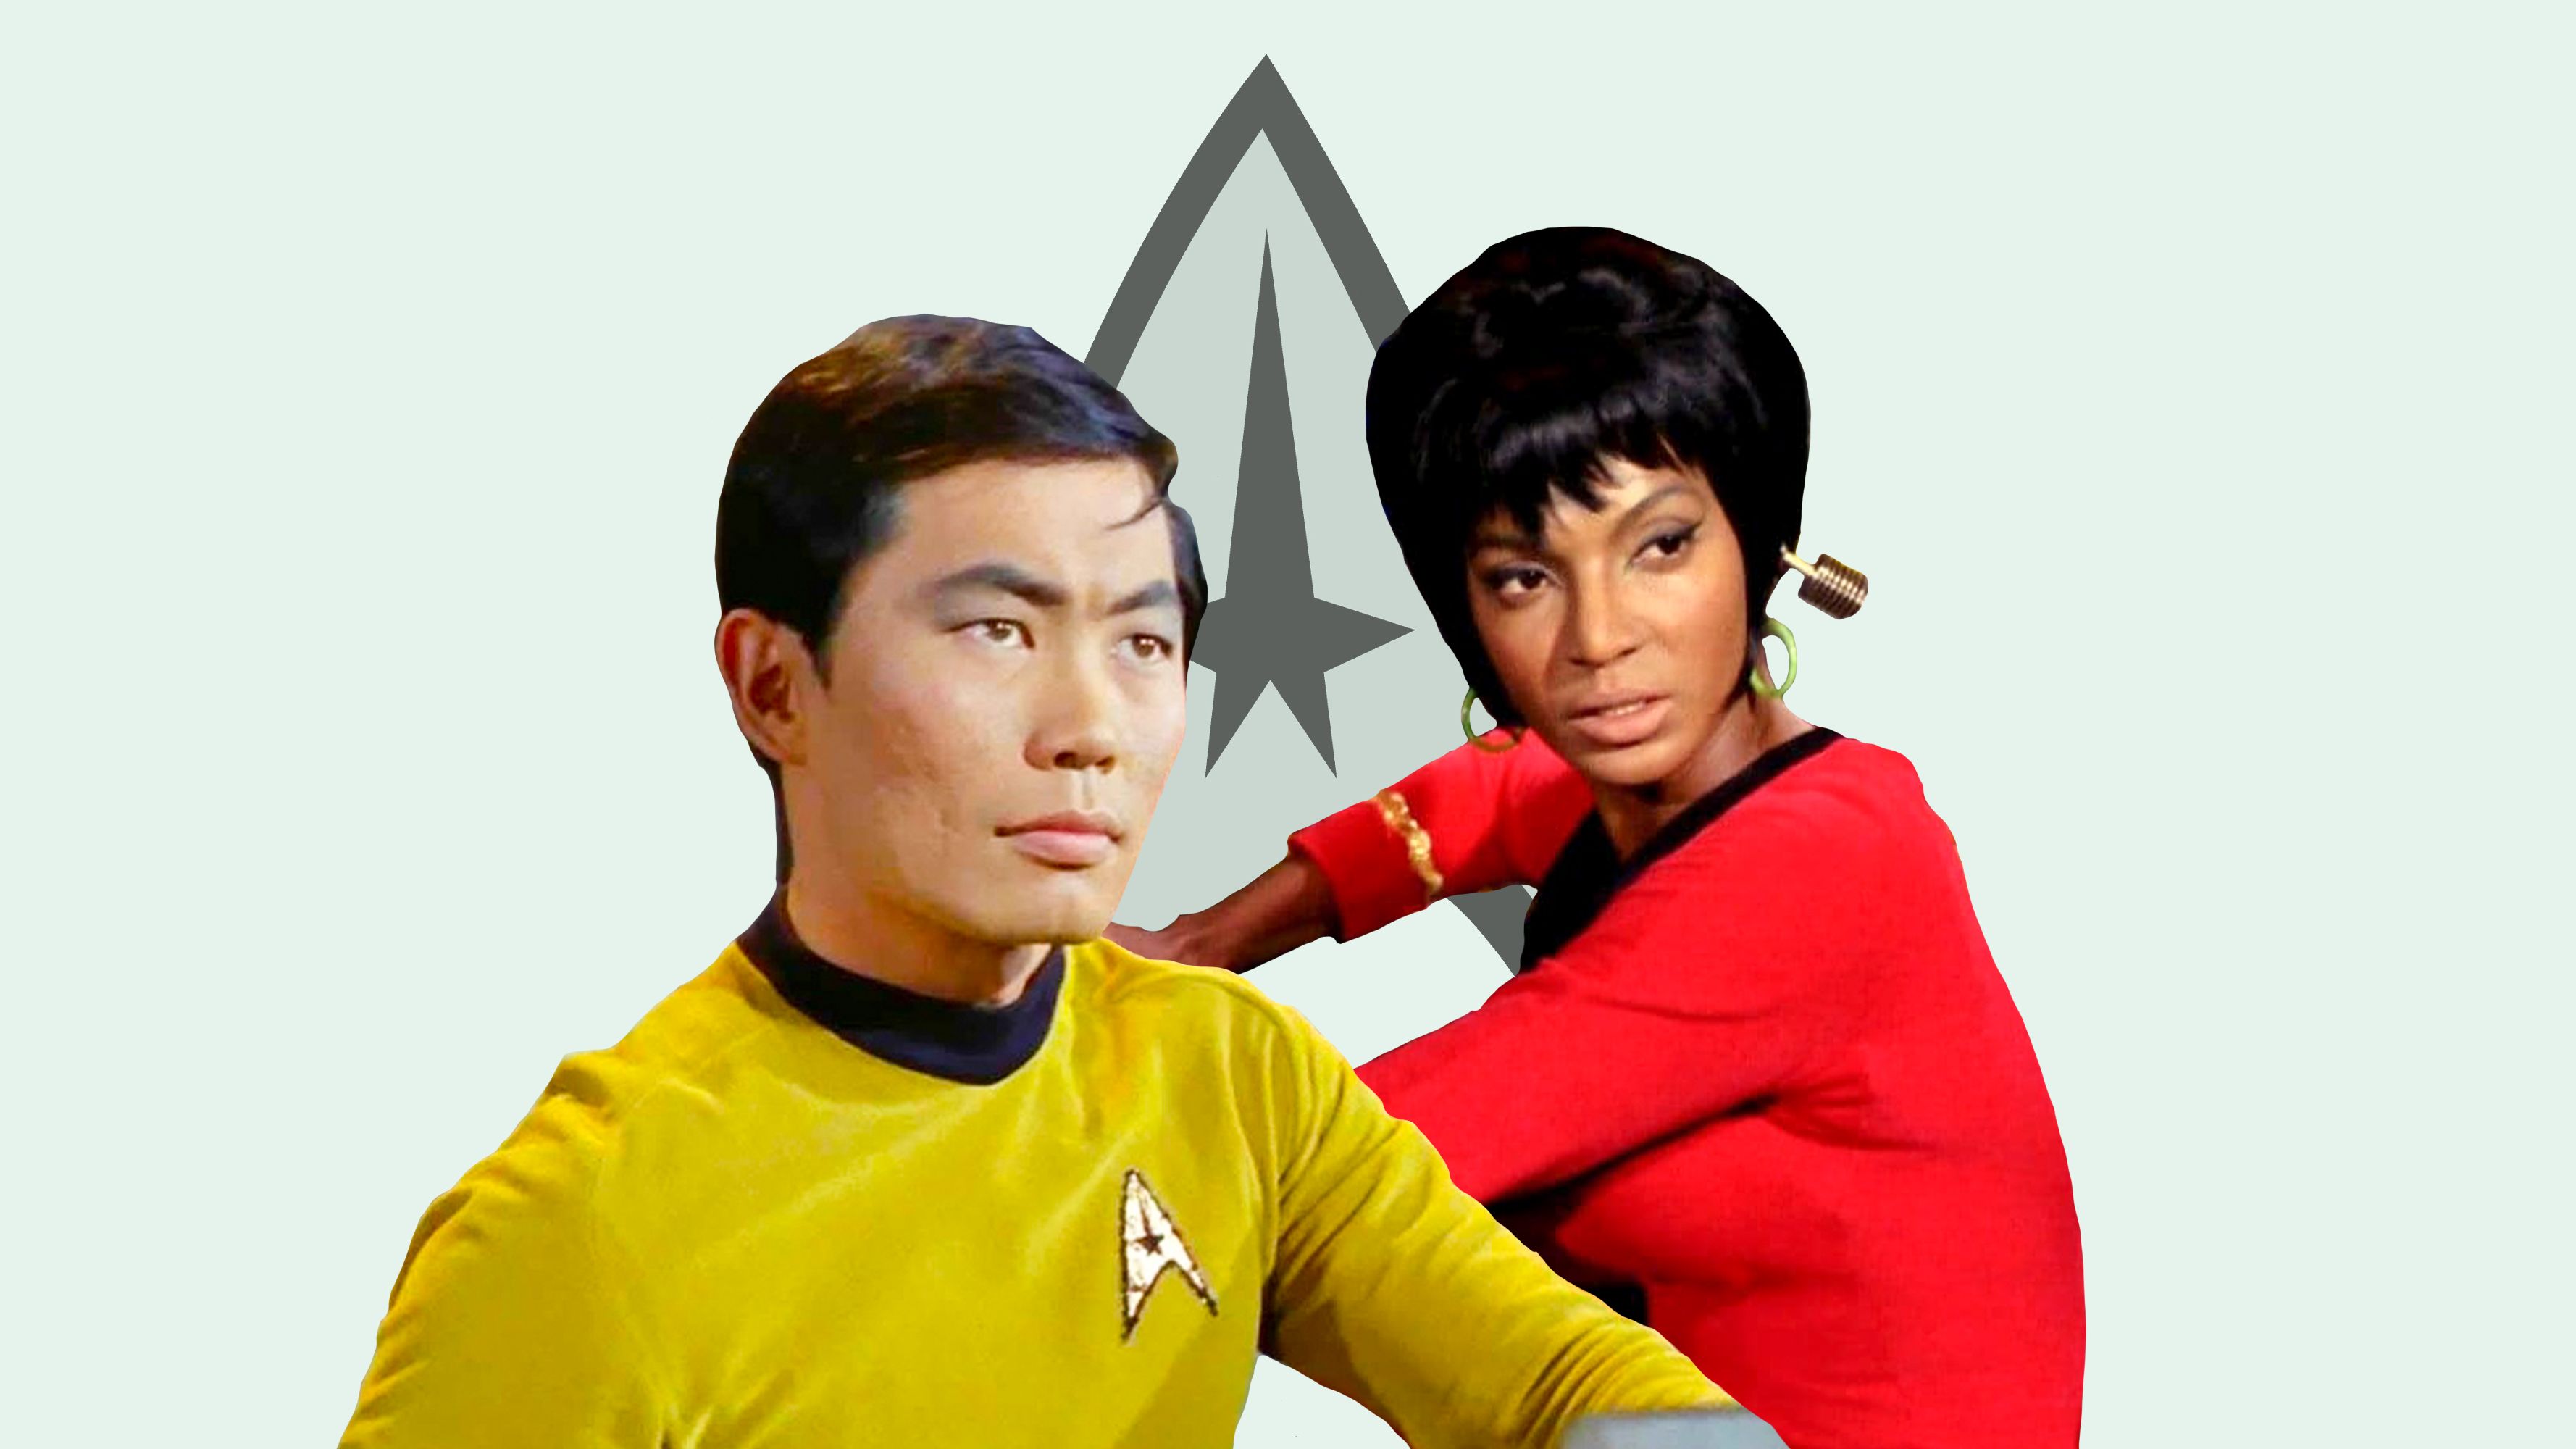 Star Trek' Diversity: How the Series Embraced, but Fell Short of Its Ideals